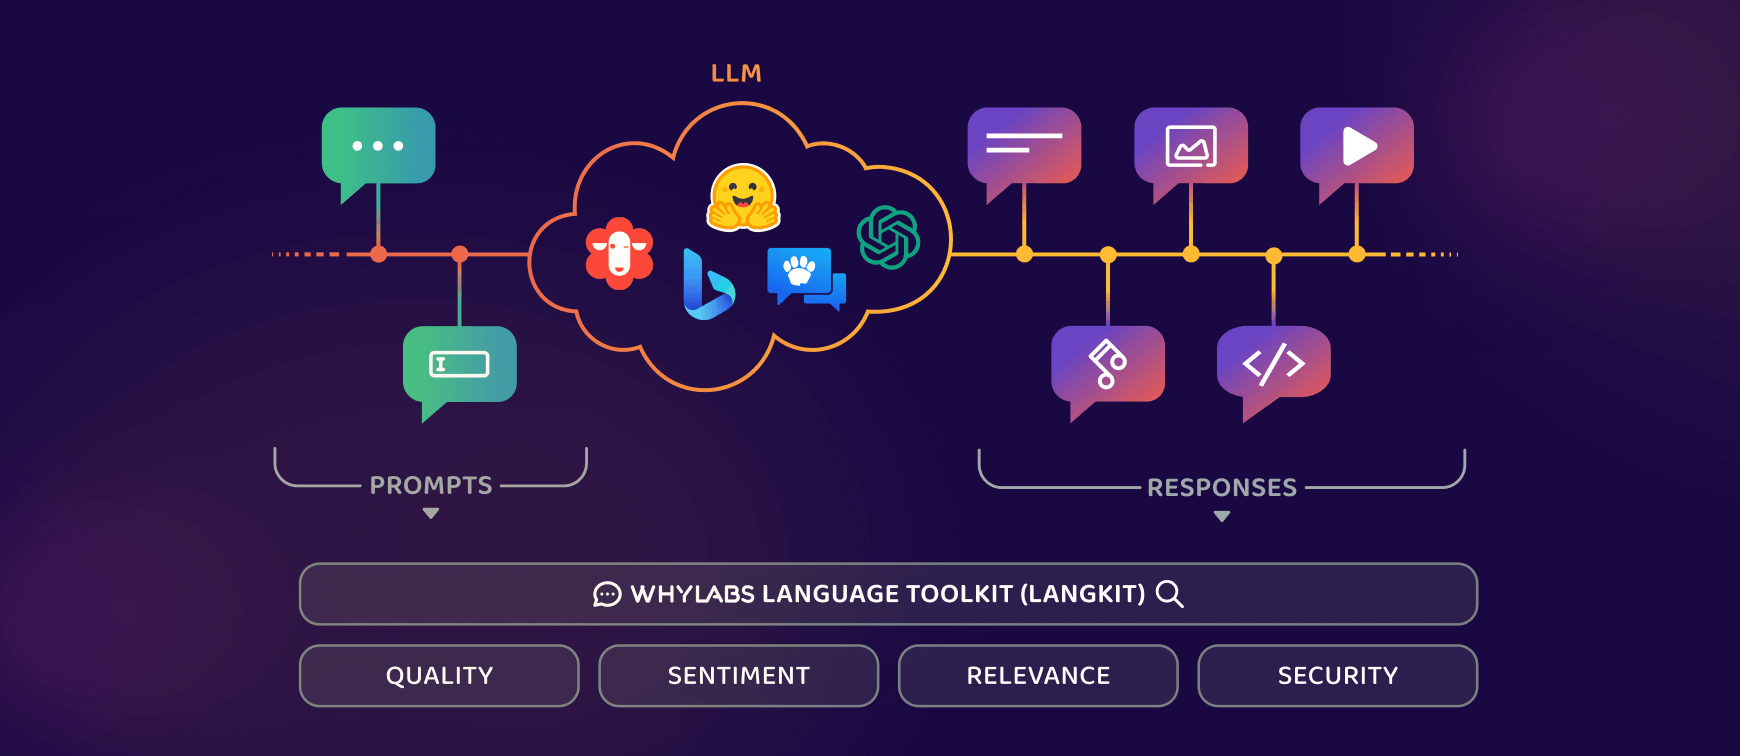 LangKit: Making Large Language Models Safe and Responsible